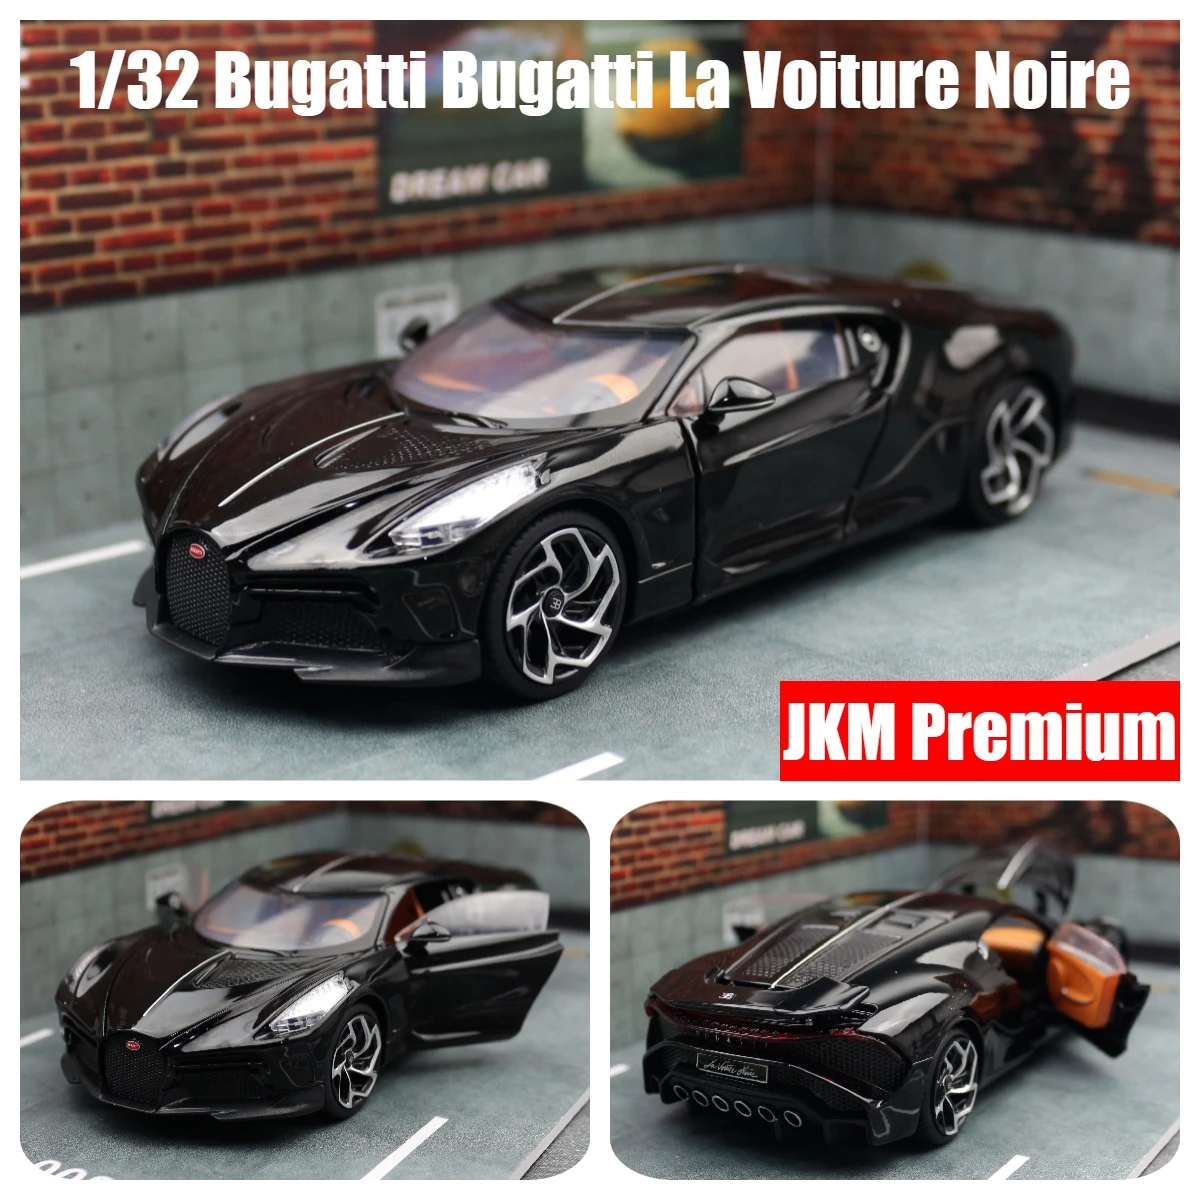 

1/32 Bugatti La Voiture Noire Car Toy For Children JKM Diecast Super Sport Miniature Model Sound & Light Collection Gift For Boy